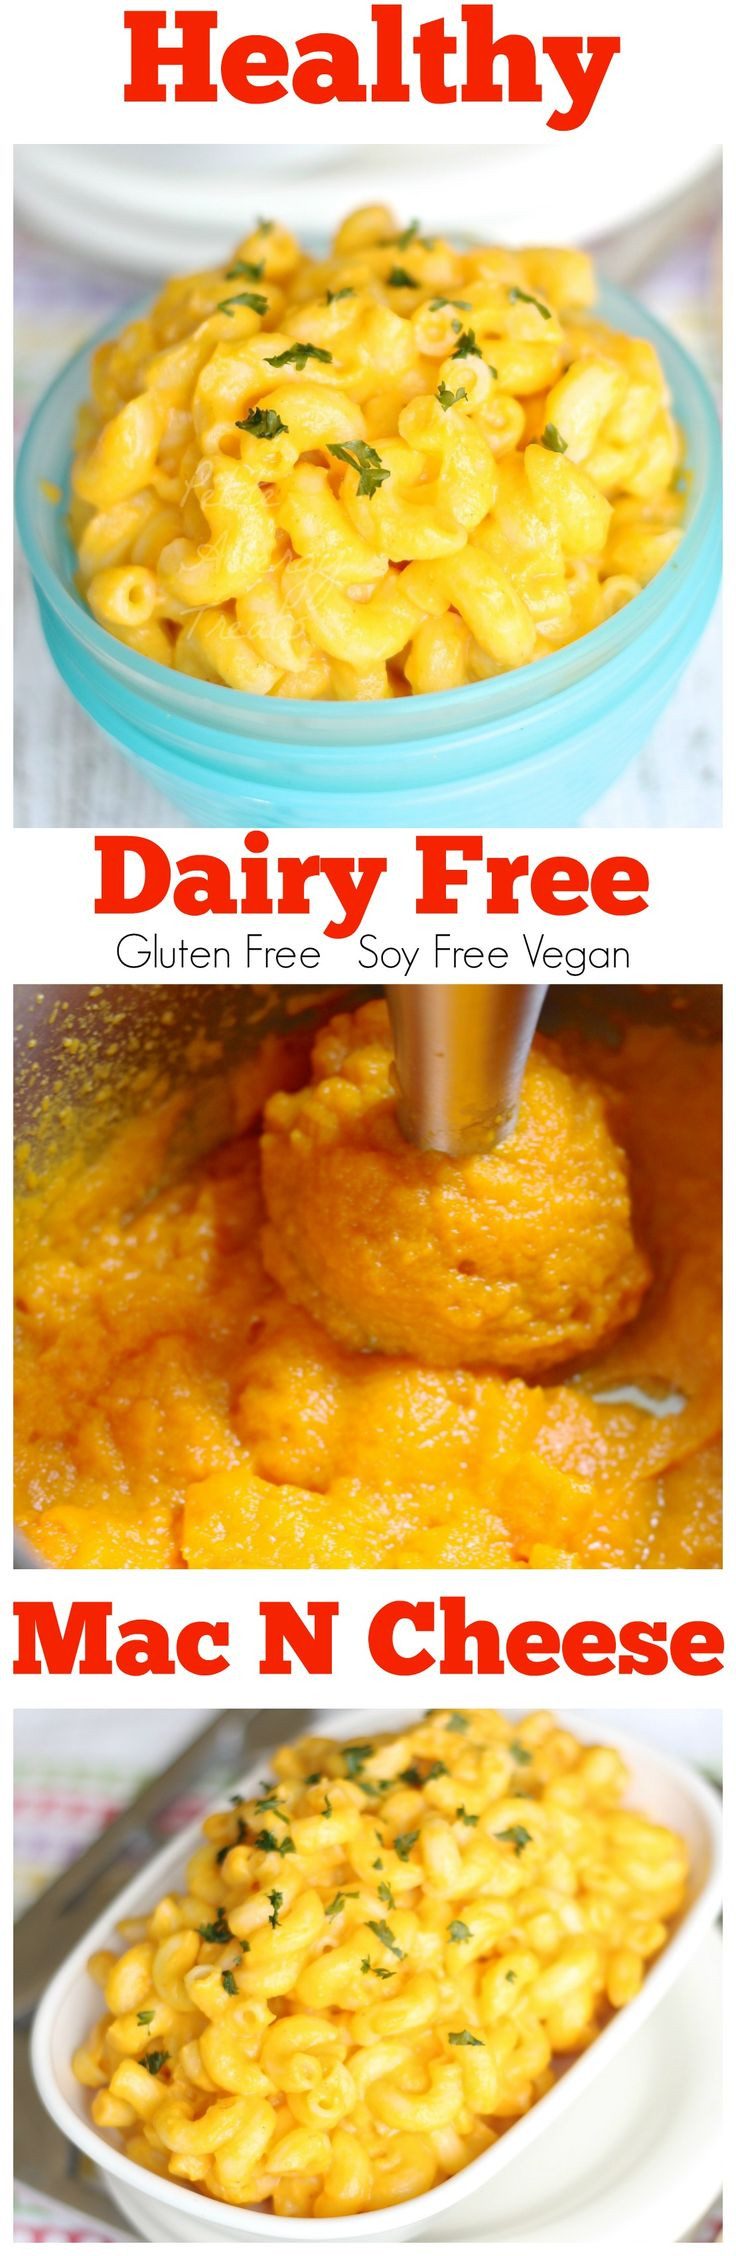 Gluten Free Egg Free Dairy Free Recipes
 122 best Vegan dishes gluten free dairy free egg free